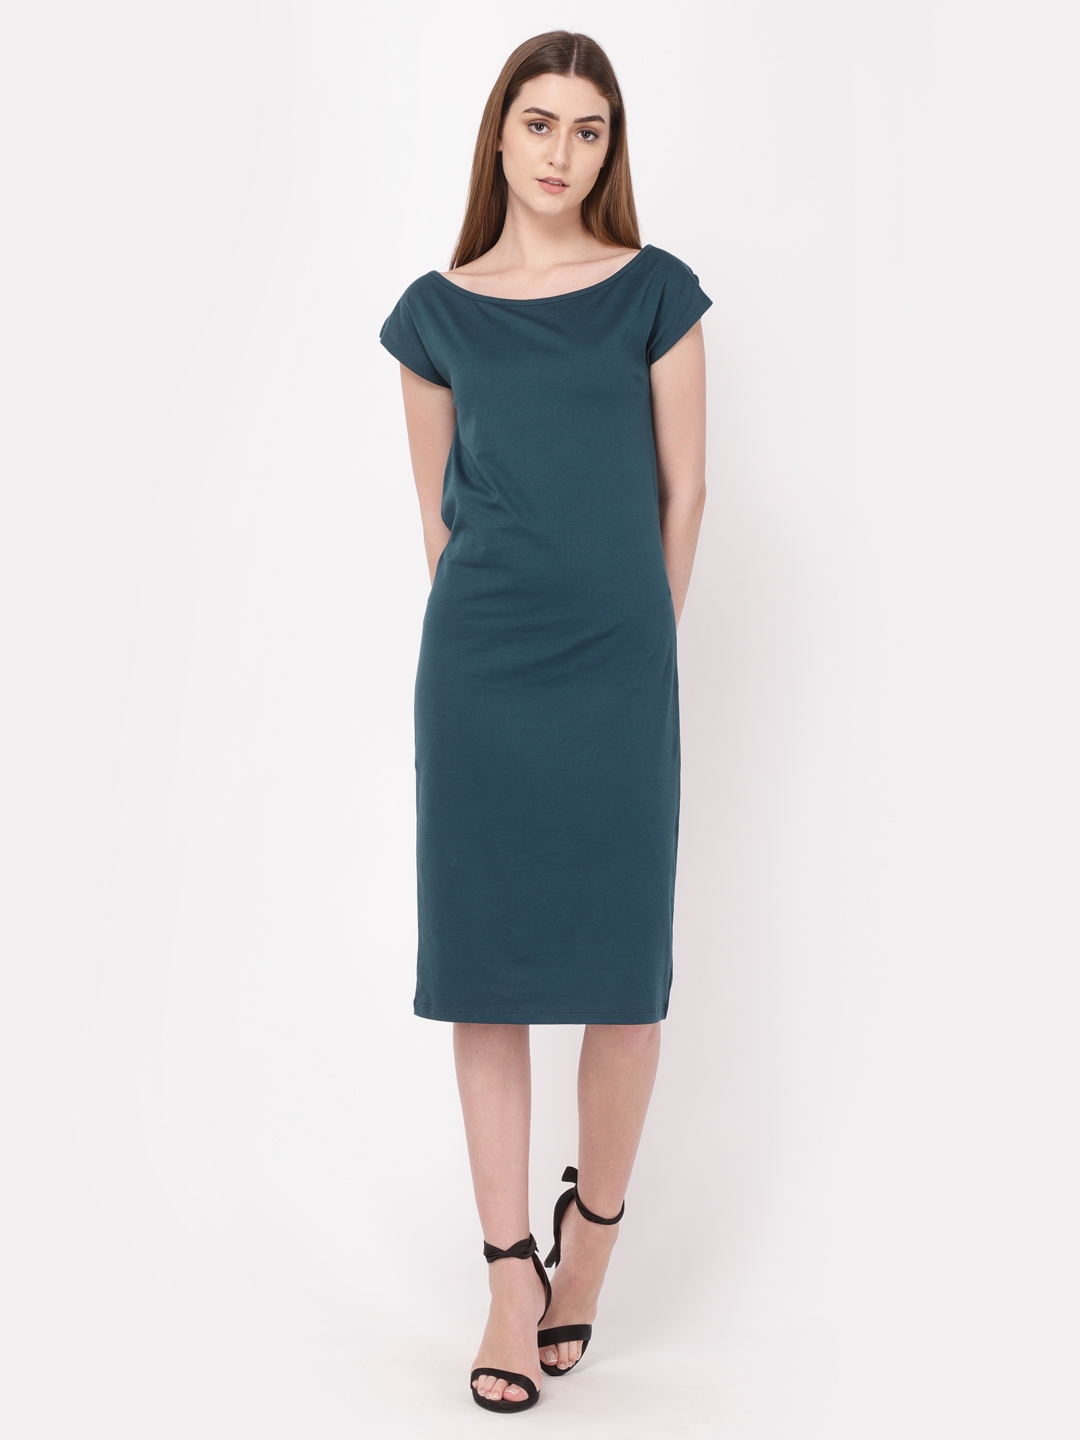 YOONOY | Green Solid Dresses